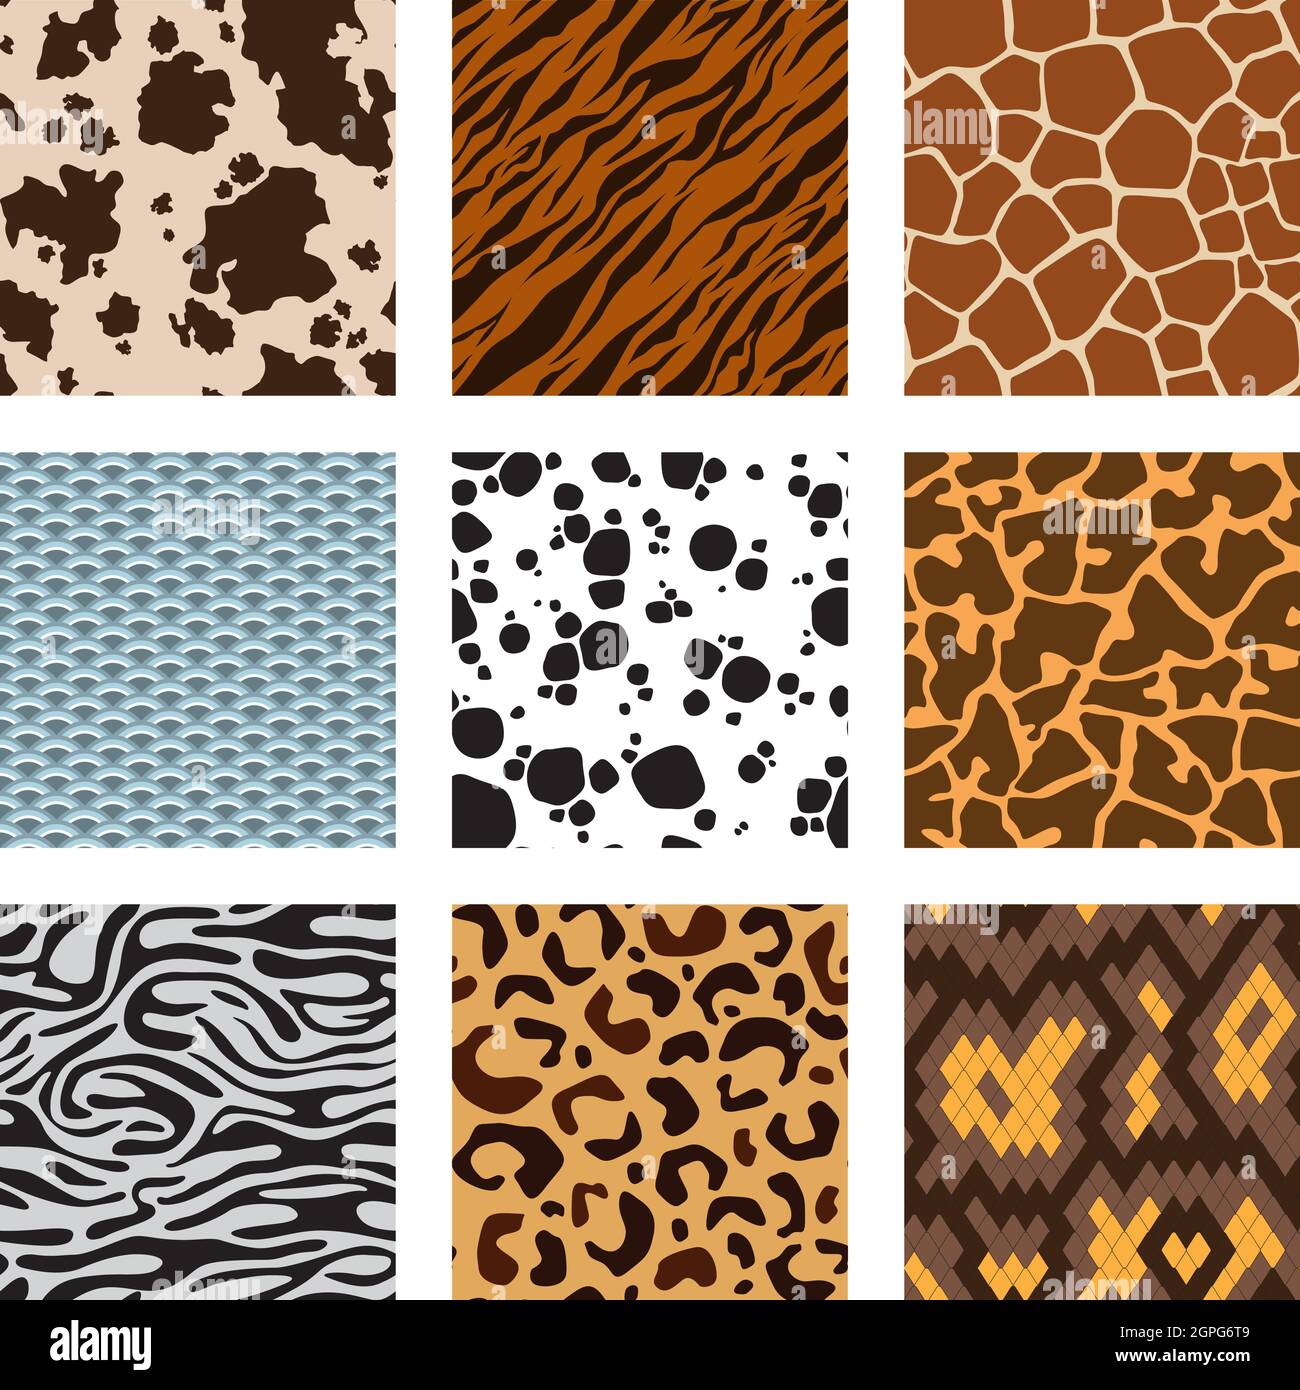 Animals skin pattern. Zoo seamless backgrounds collection of zebra tiger giraffe snake skins vector set Stock Vector